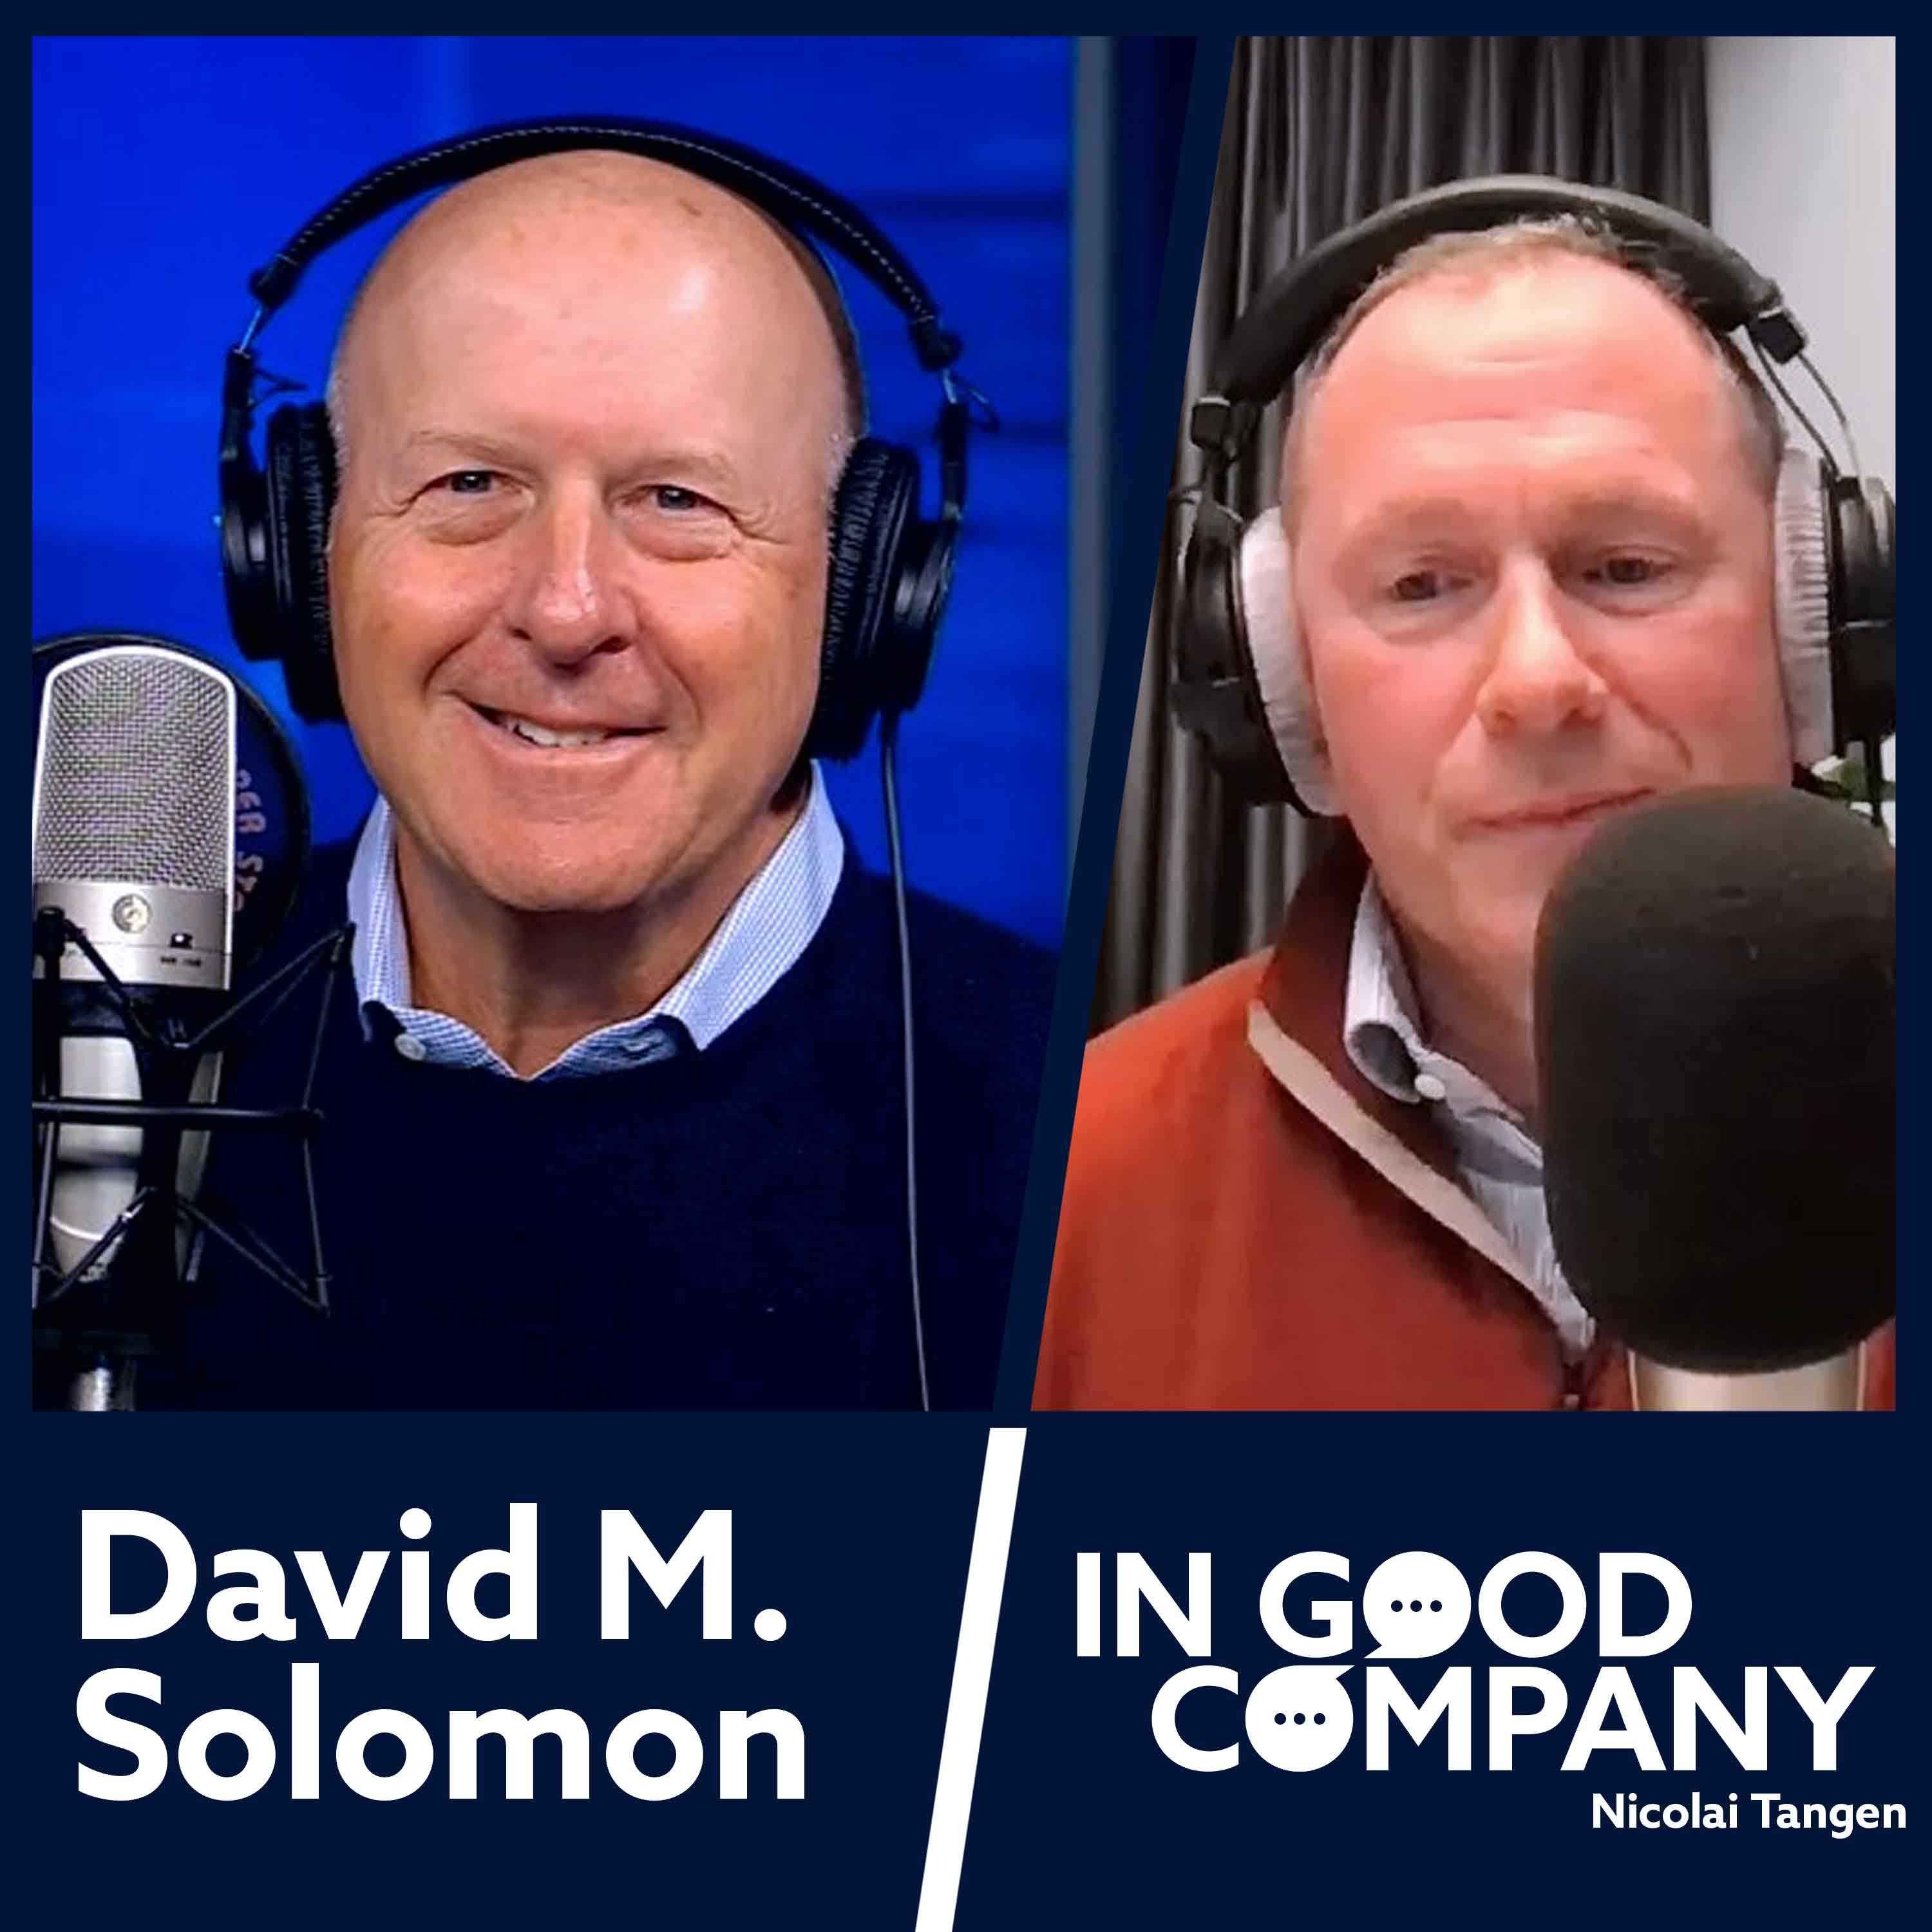 David M. Solomon CEO of Goldman Sachs